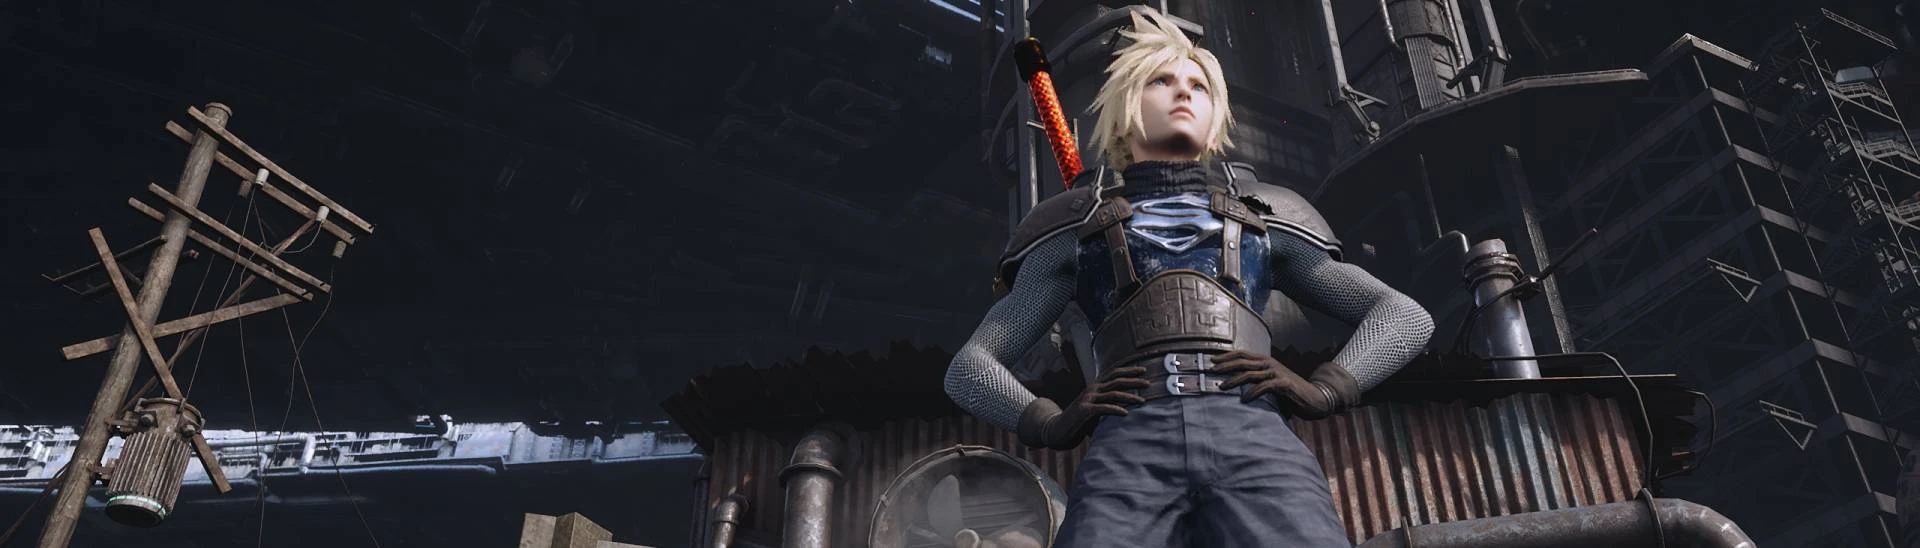 Final Fantasy 7 Remake Mod: Lightning Dress. by Venom-Rules-all on